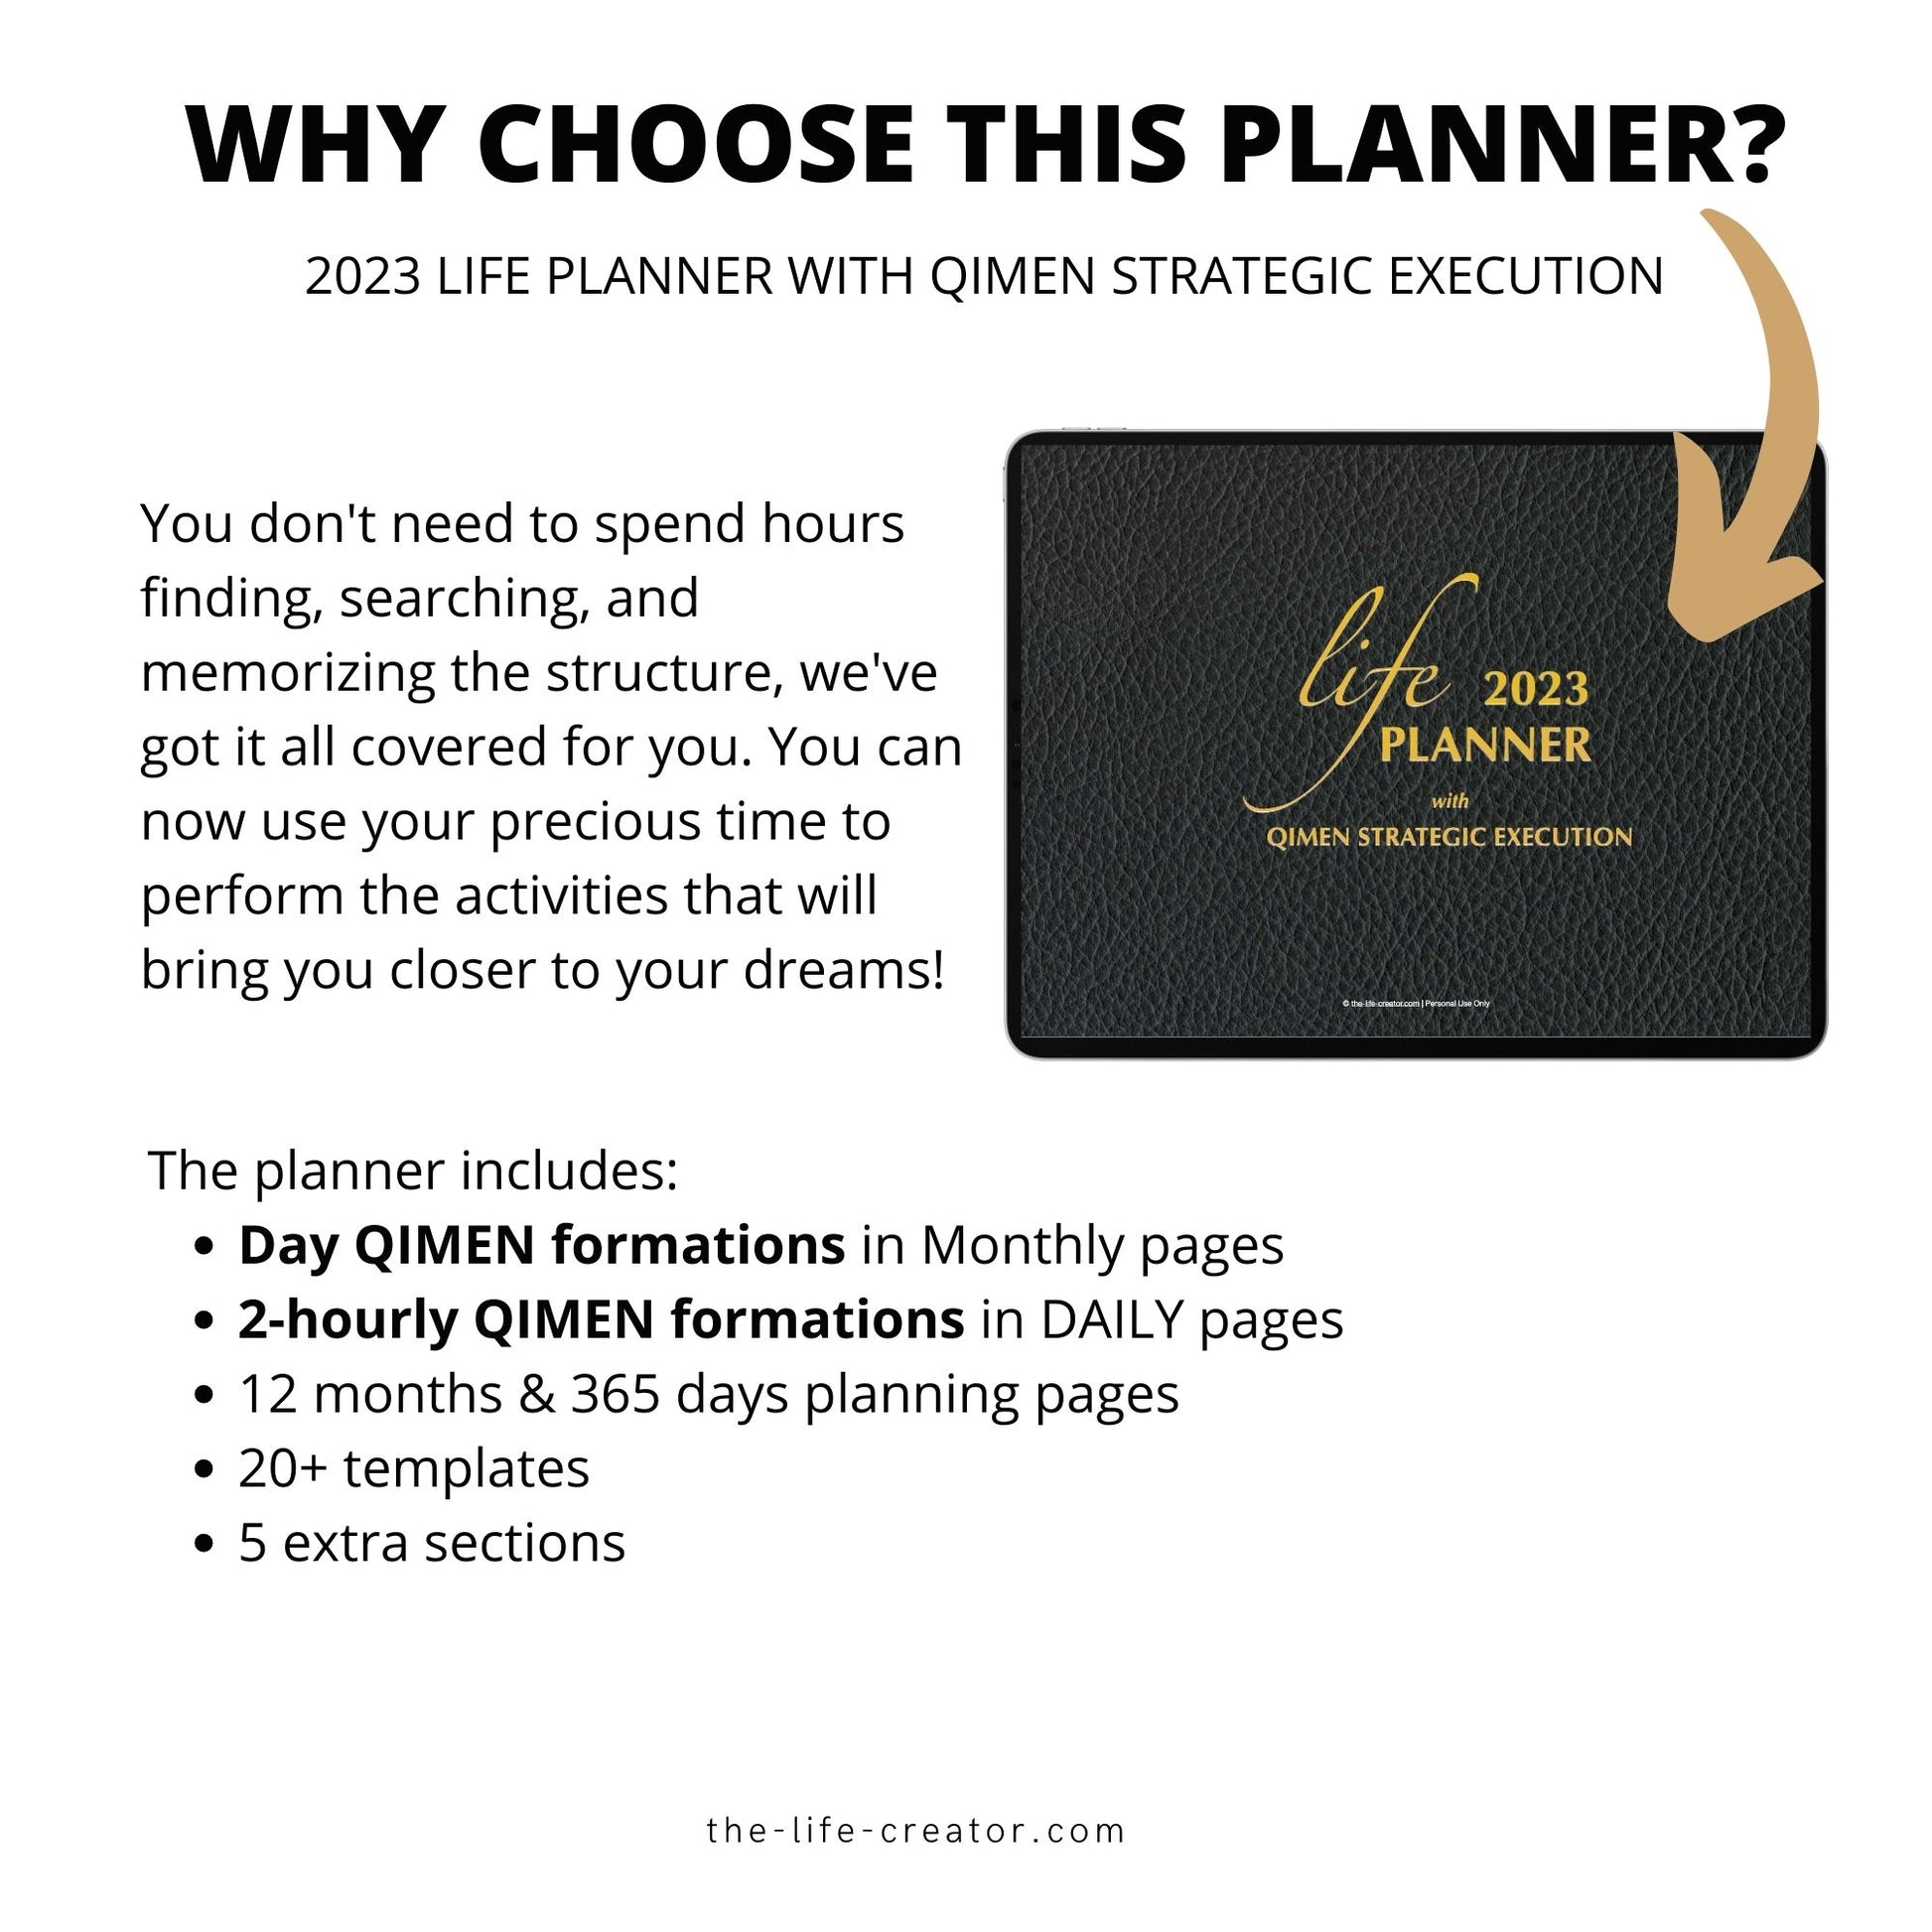 2024 Qimen Life Planner – The Life Creator